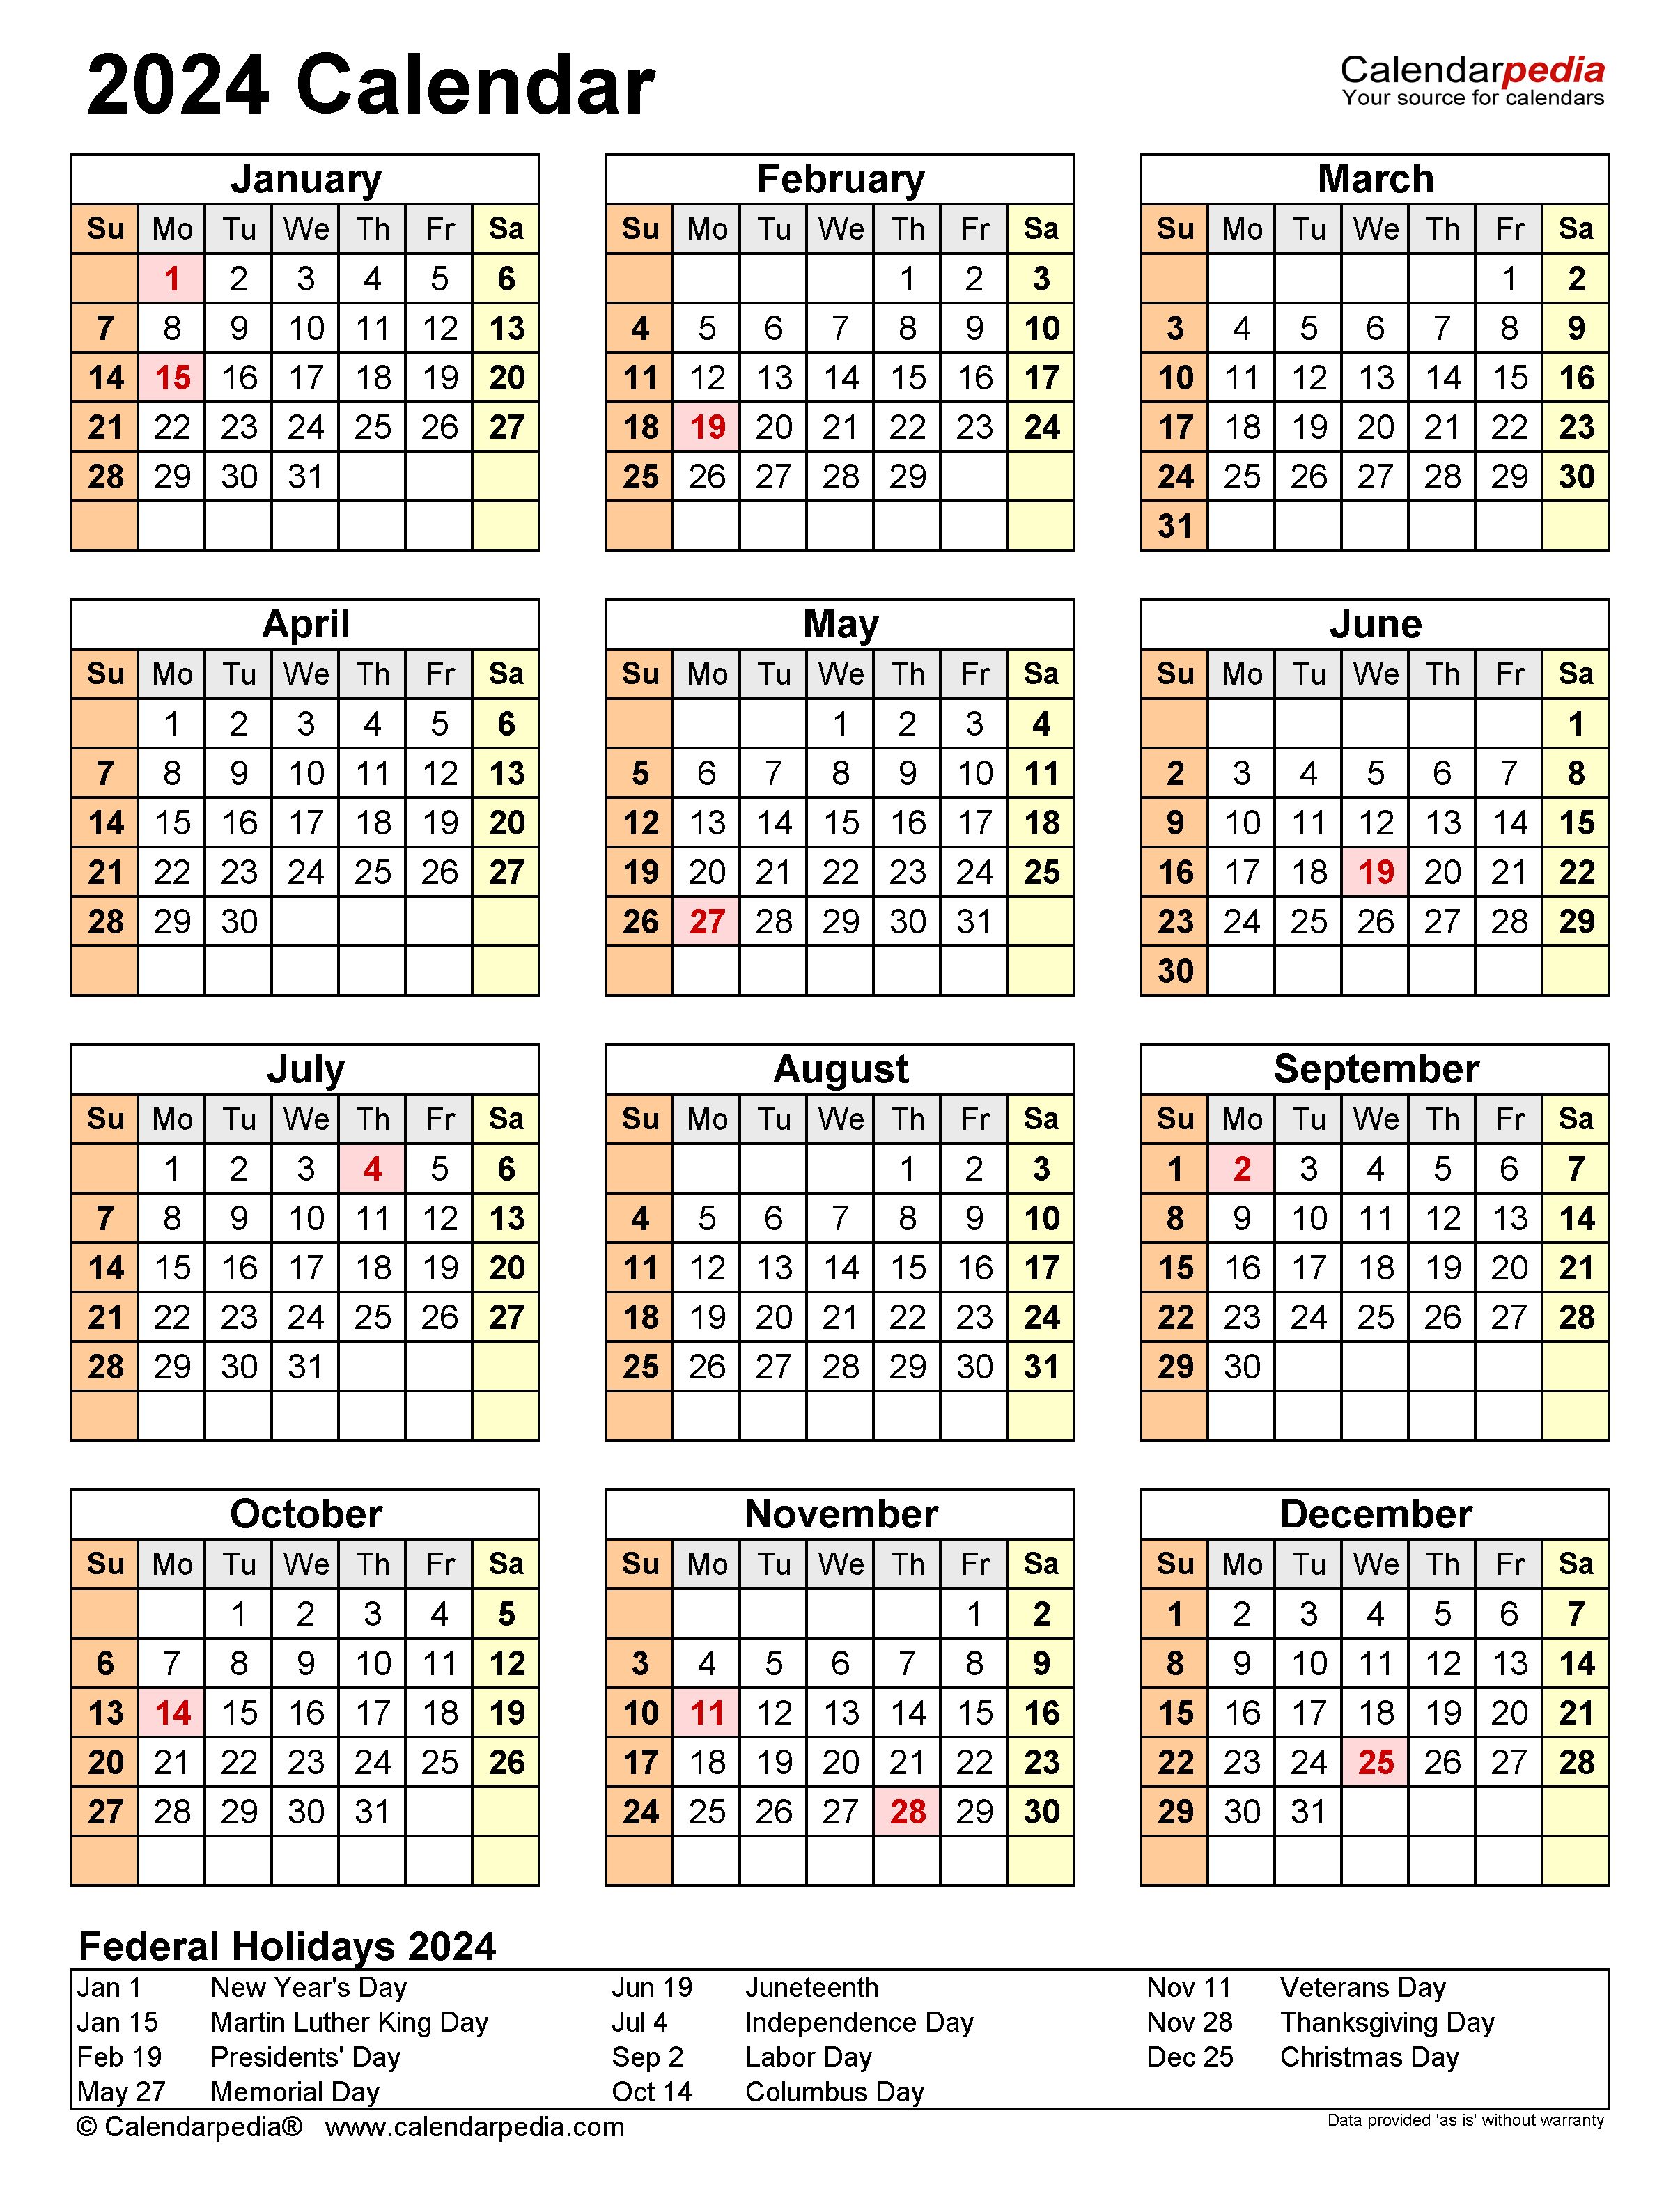 Free Printable 2024 Calendar With Holidays Crownflourmills | Free Printable 2024 Photo Calendar With Holidays